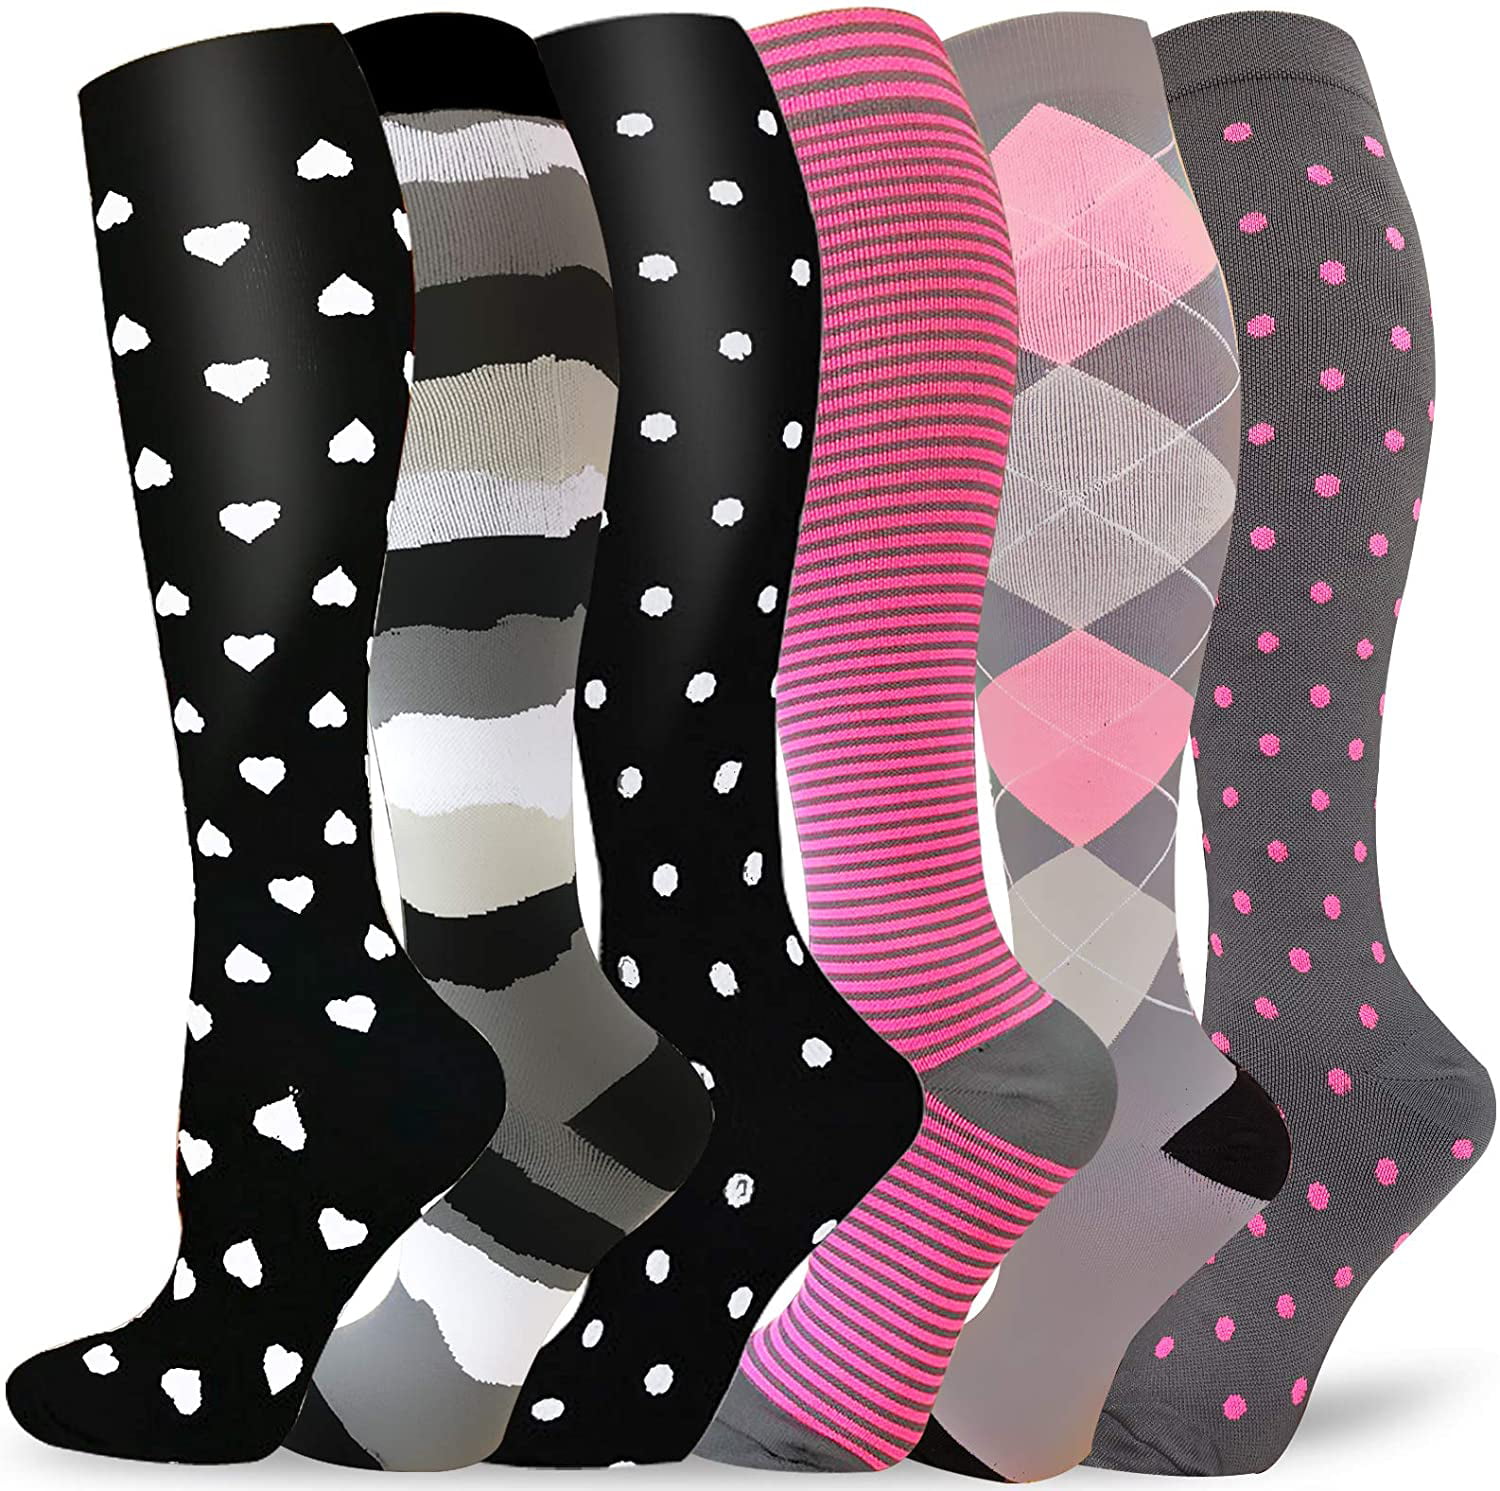 Graduated Medical Compression Socks for Women&Men 20-30mmhg Knee High Sock 